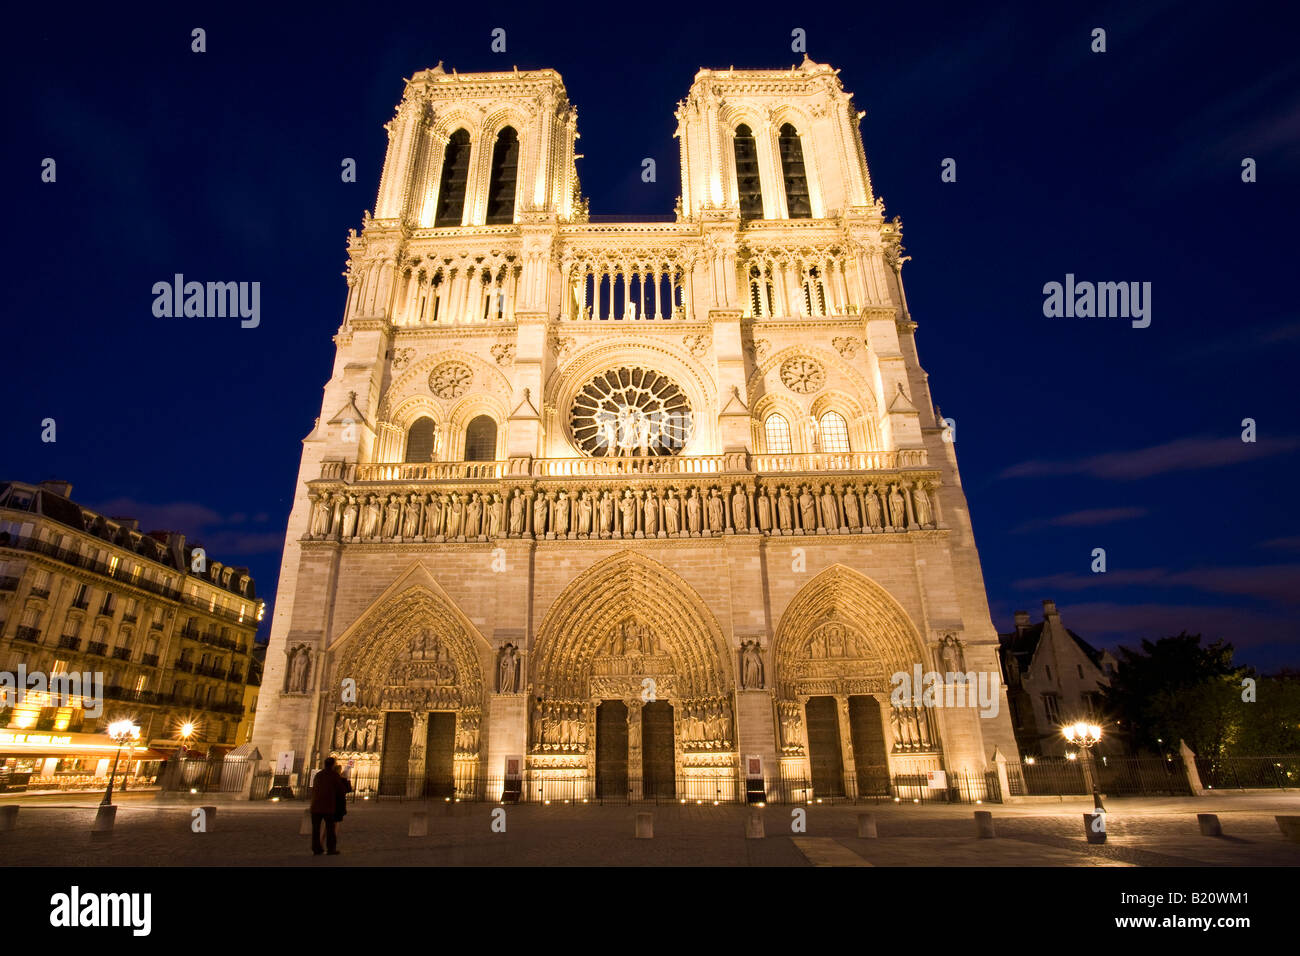 Notre Dame Cathedral floodlit illuminated illuminations in evening night light Paris France Europe EU Stock Photo